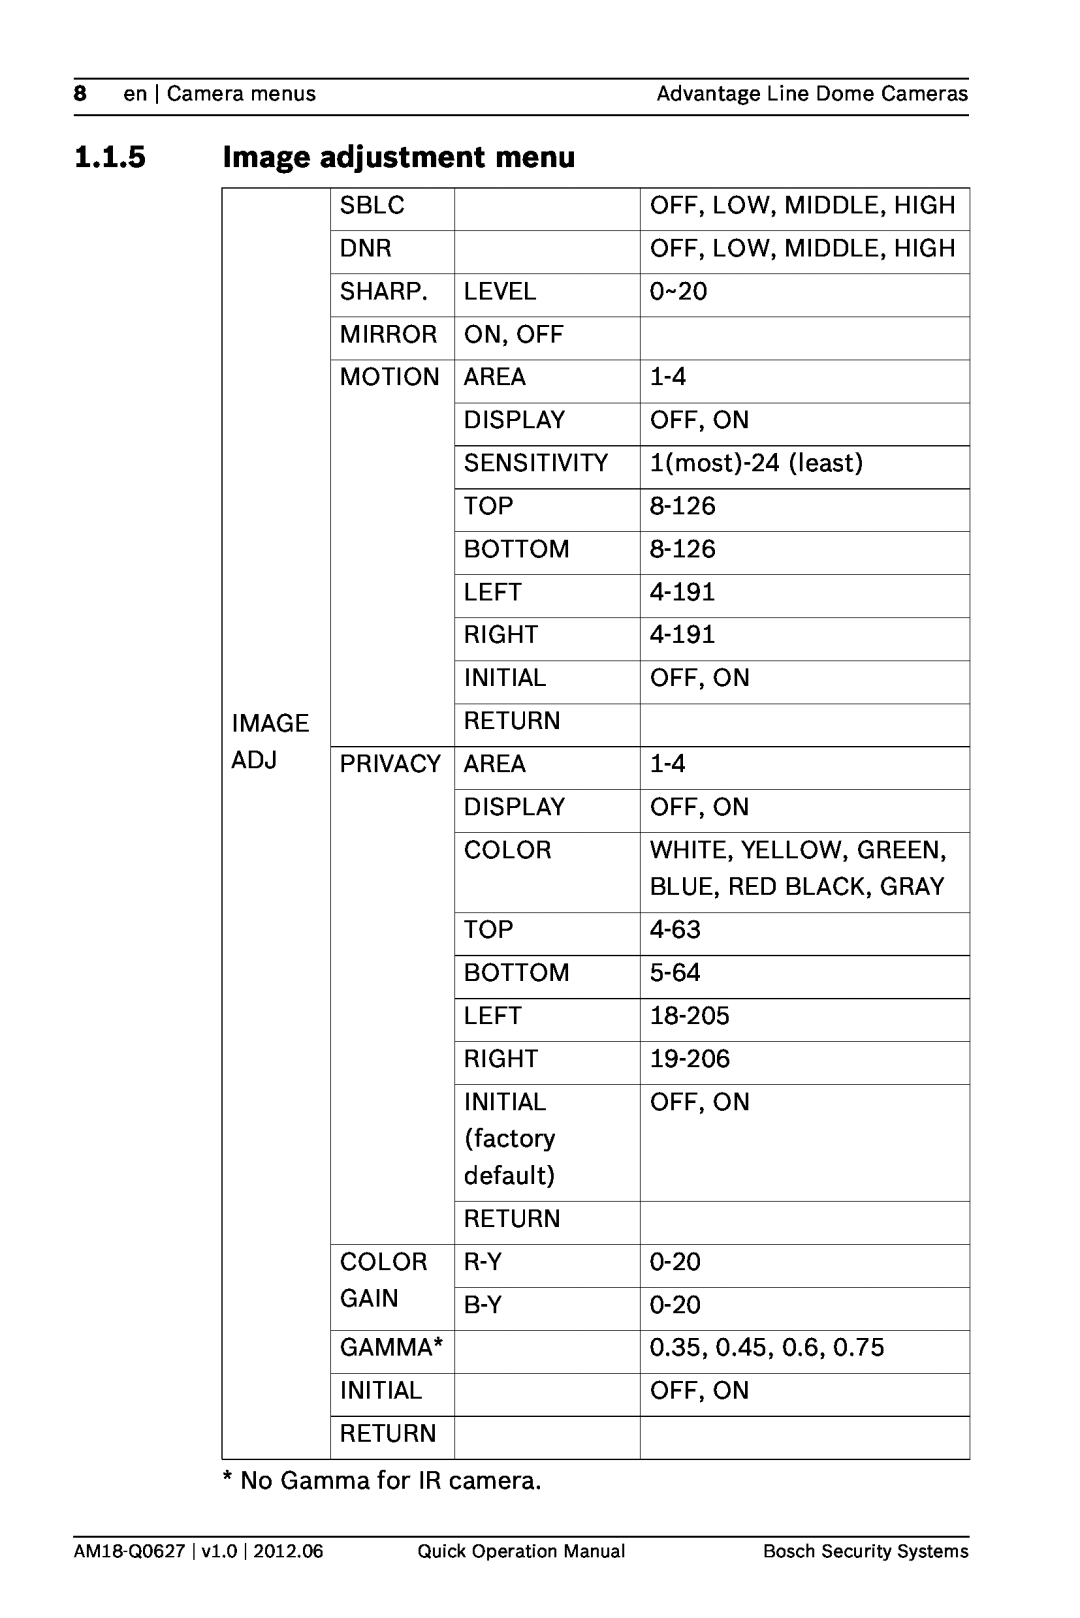 Bosch Appliances VDC-240, VDI-240, VDC-250, VDN-240, VDC-260 manual Image adjustment menu 